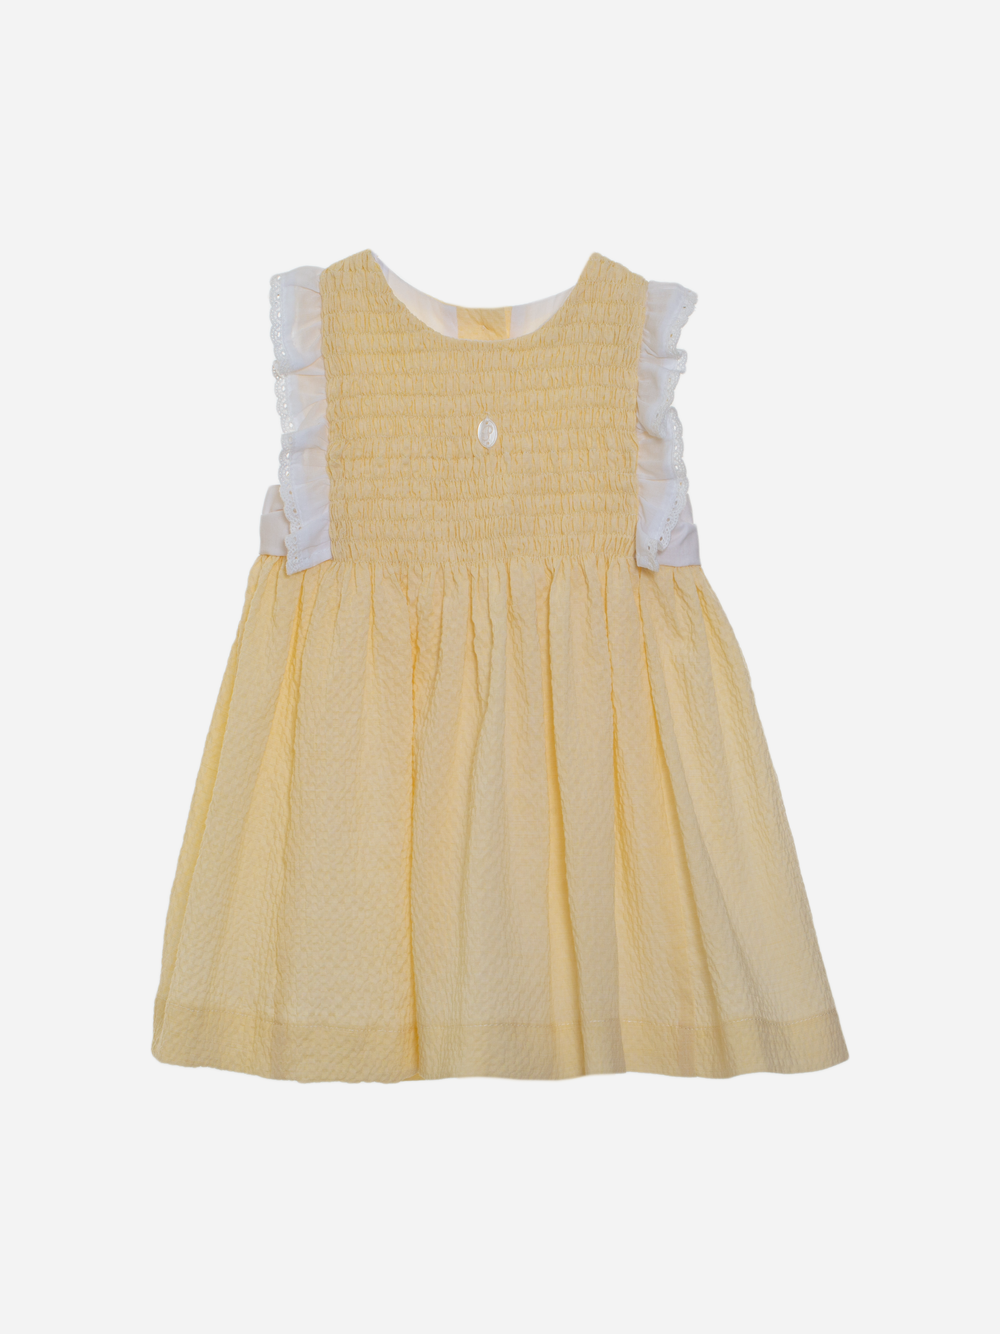 Baby girl yellow dress with ruffles